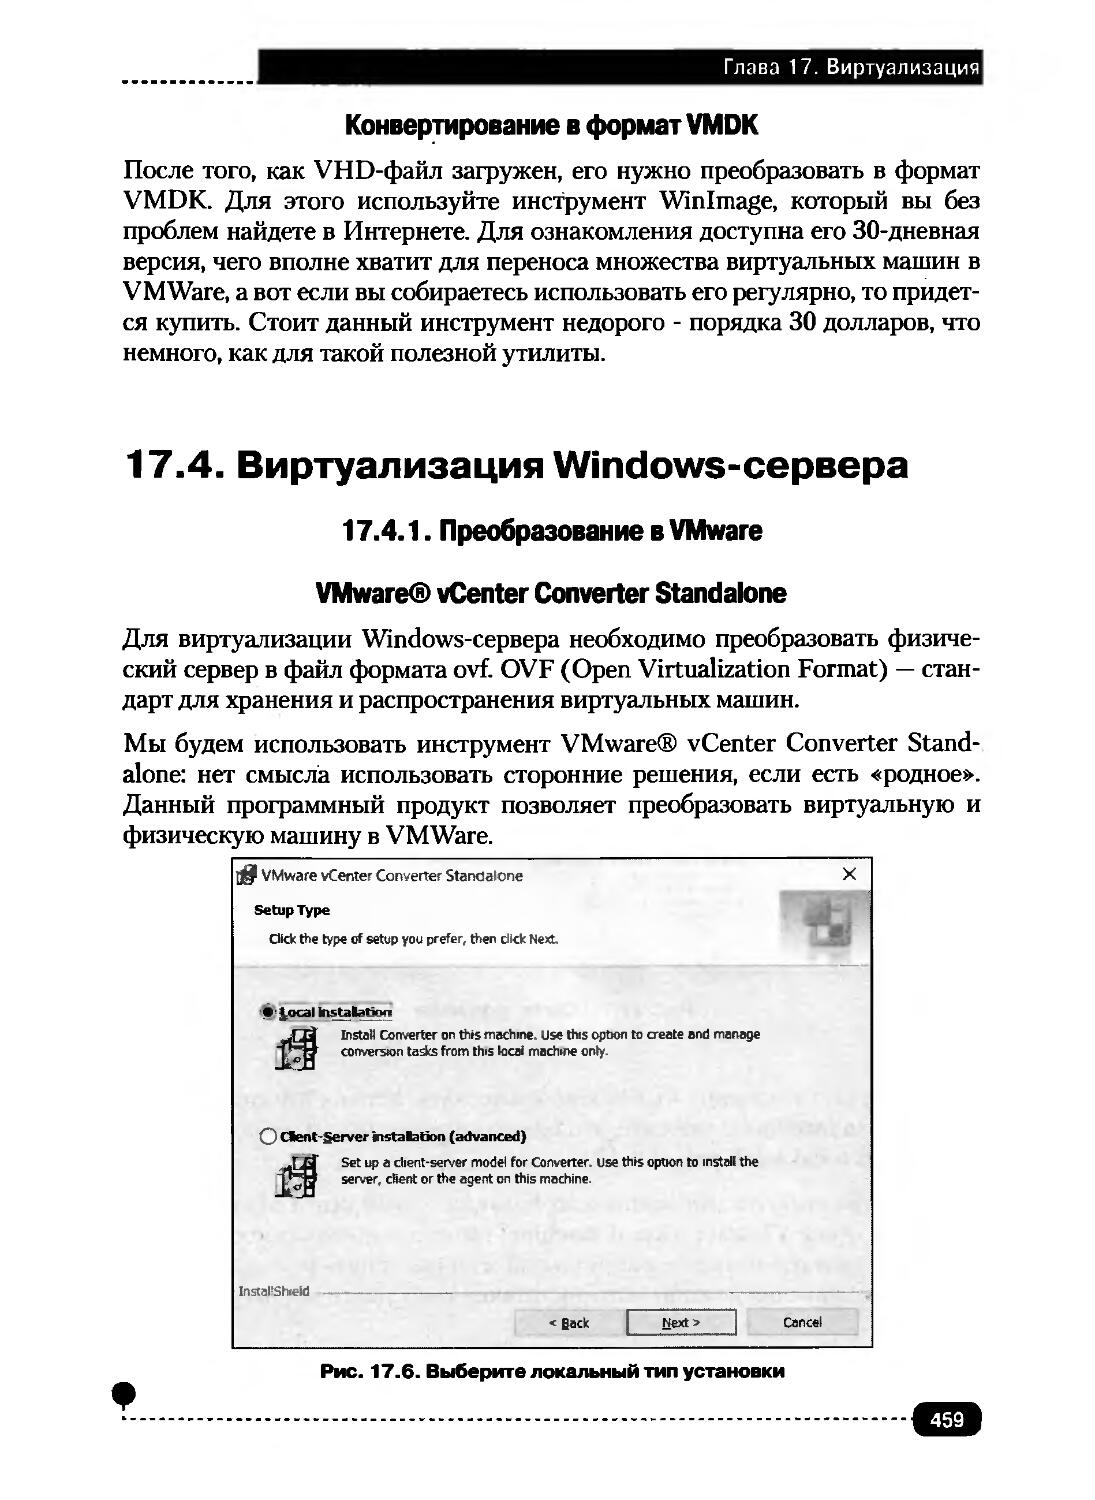 Конвертирование в формат VMDK
17.4. ВИРТУАЛИЗАЦИЯ WINDOWS-СЕРВЕРА